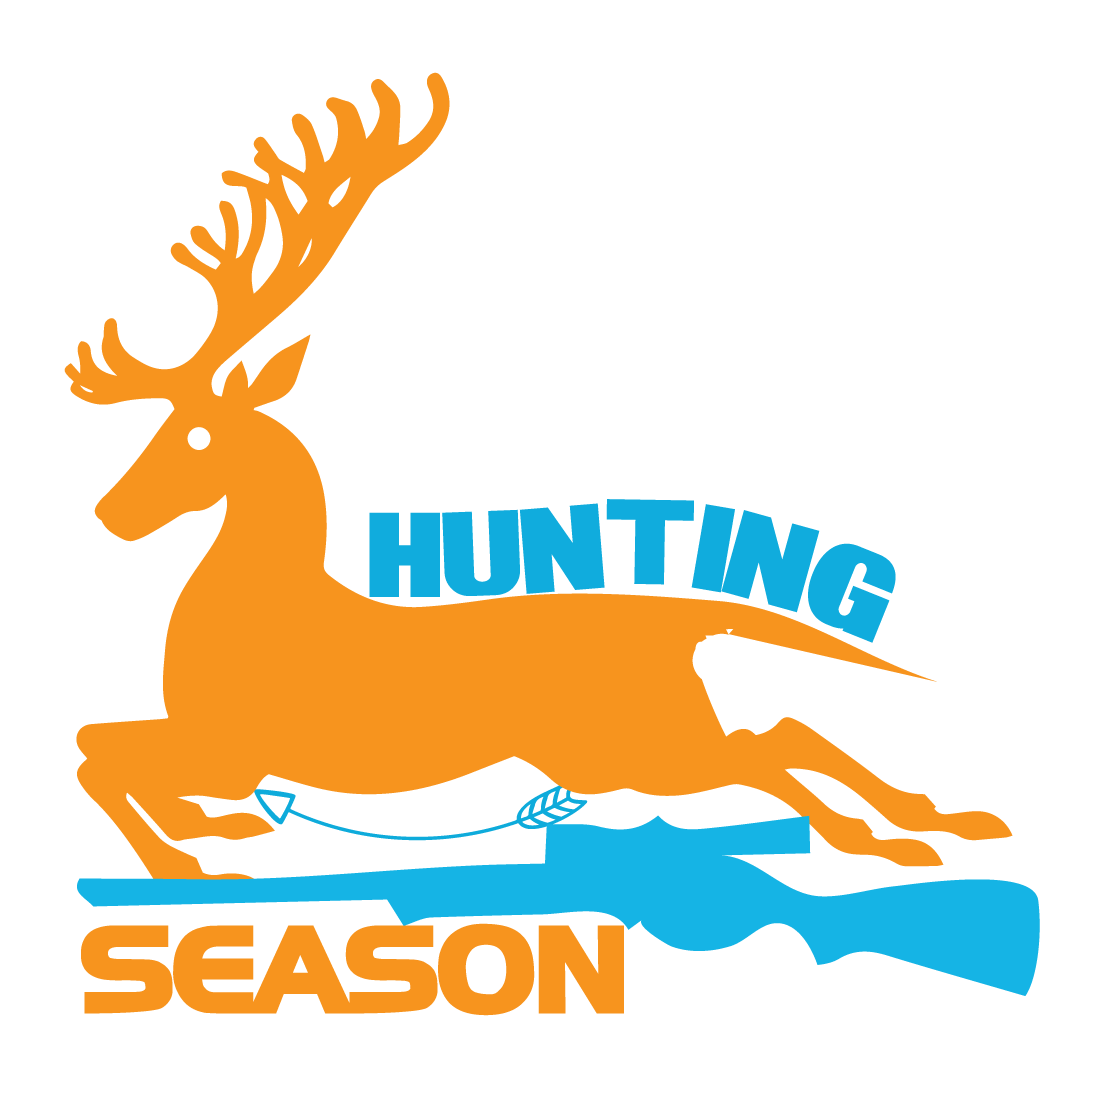 Hunting season preview image.